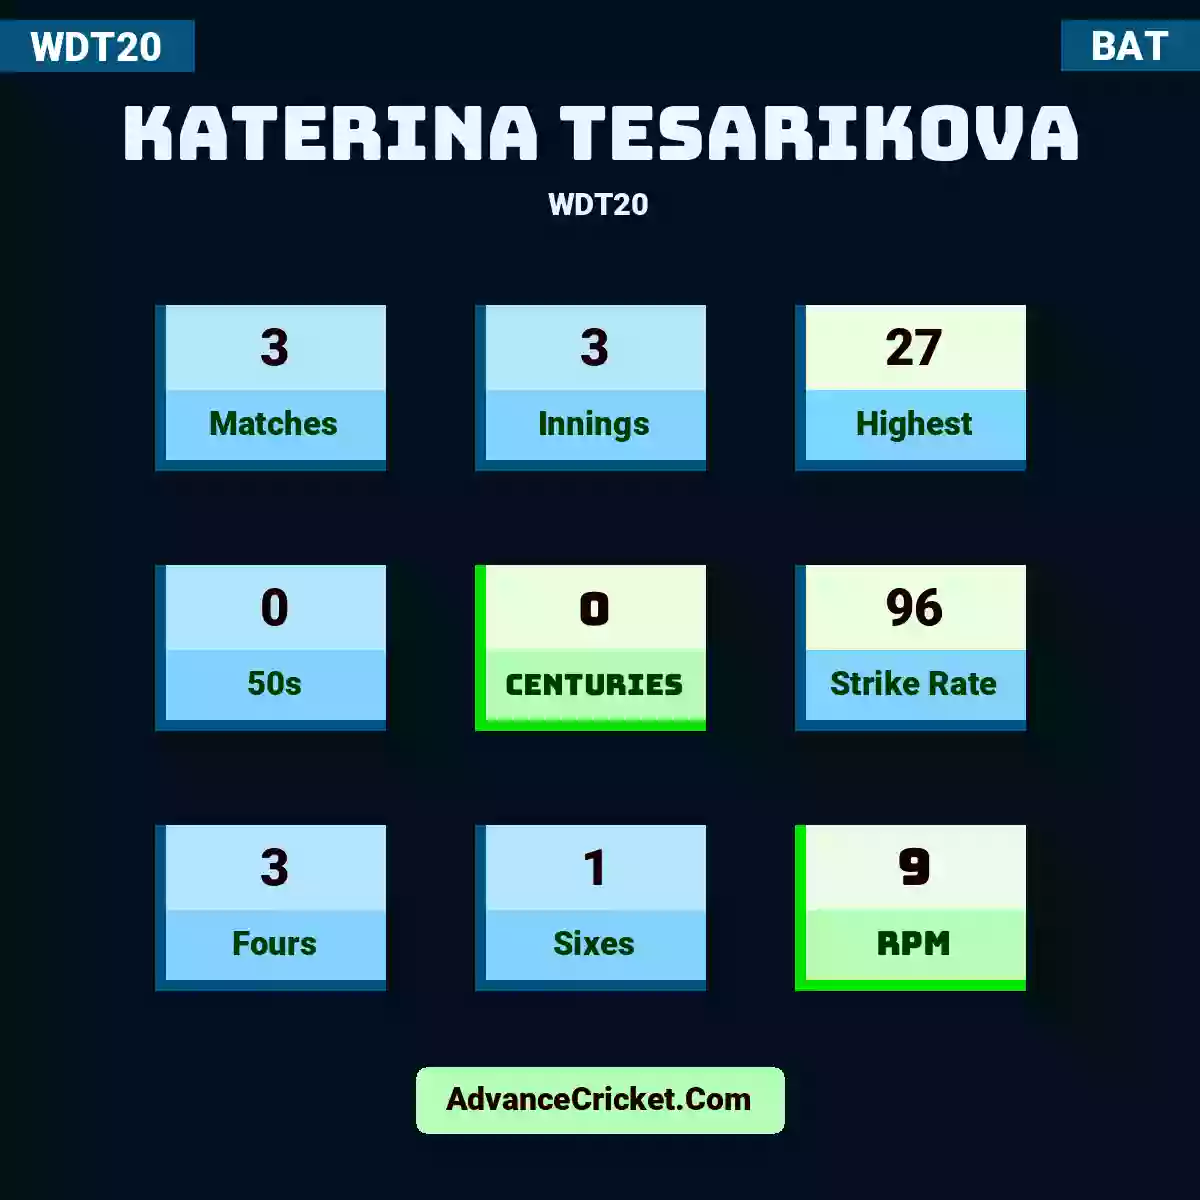 Katerina Tesarikova WDT20 , Katerina Tesarikova played 3 matches, scored 27 runs as highest, 0 half-centuries, and 0 centuries, with a strike rate of 96. K.Tesarikova hit 3 fours and 1 sixes, with an RPM of 9.